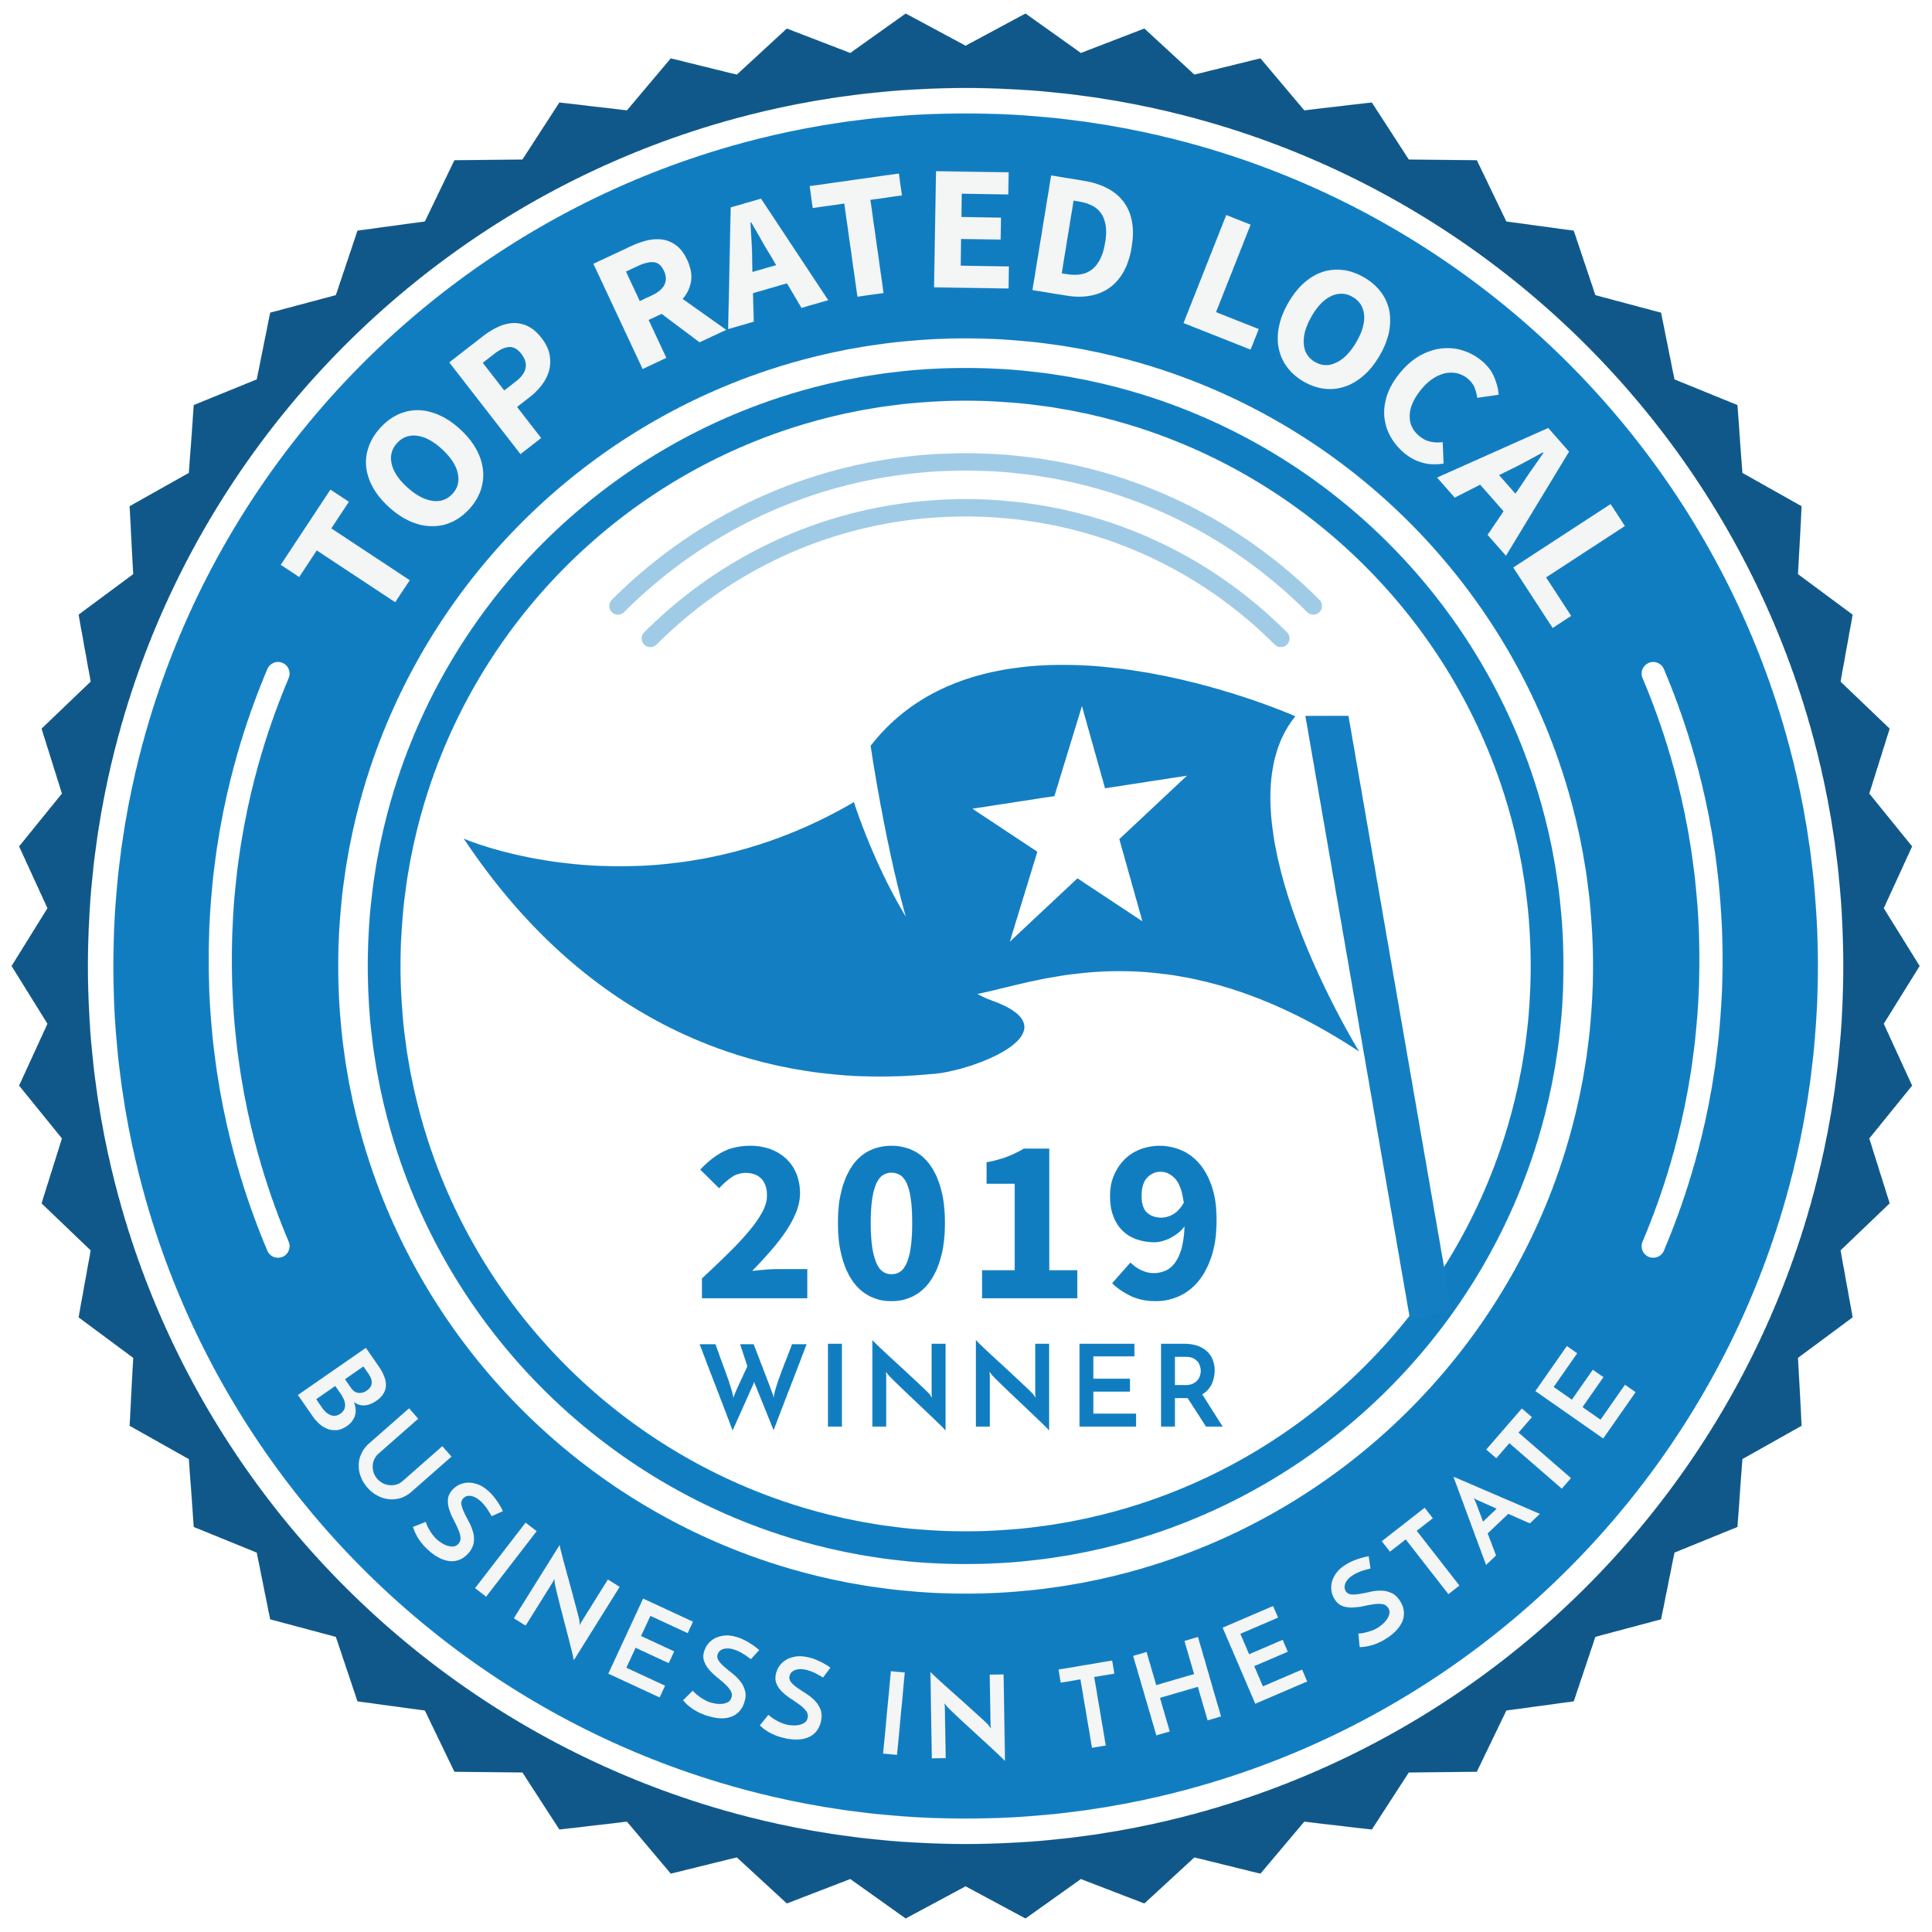 Top Rated Local 2019 Award